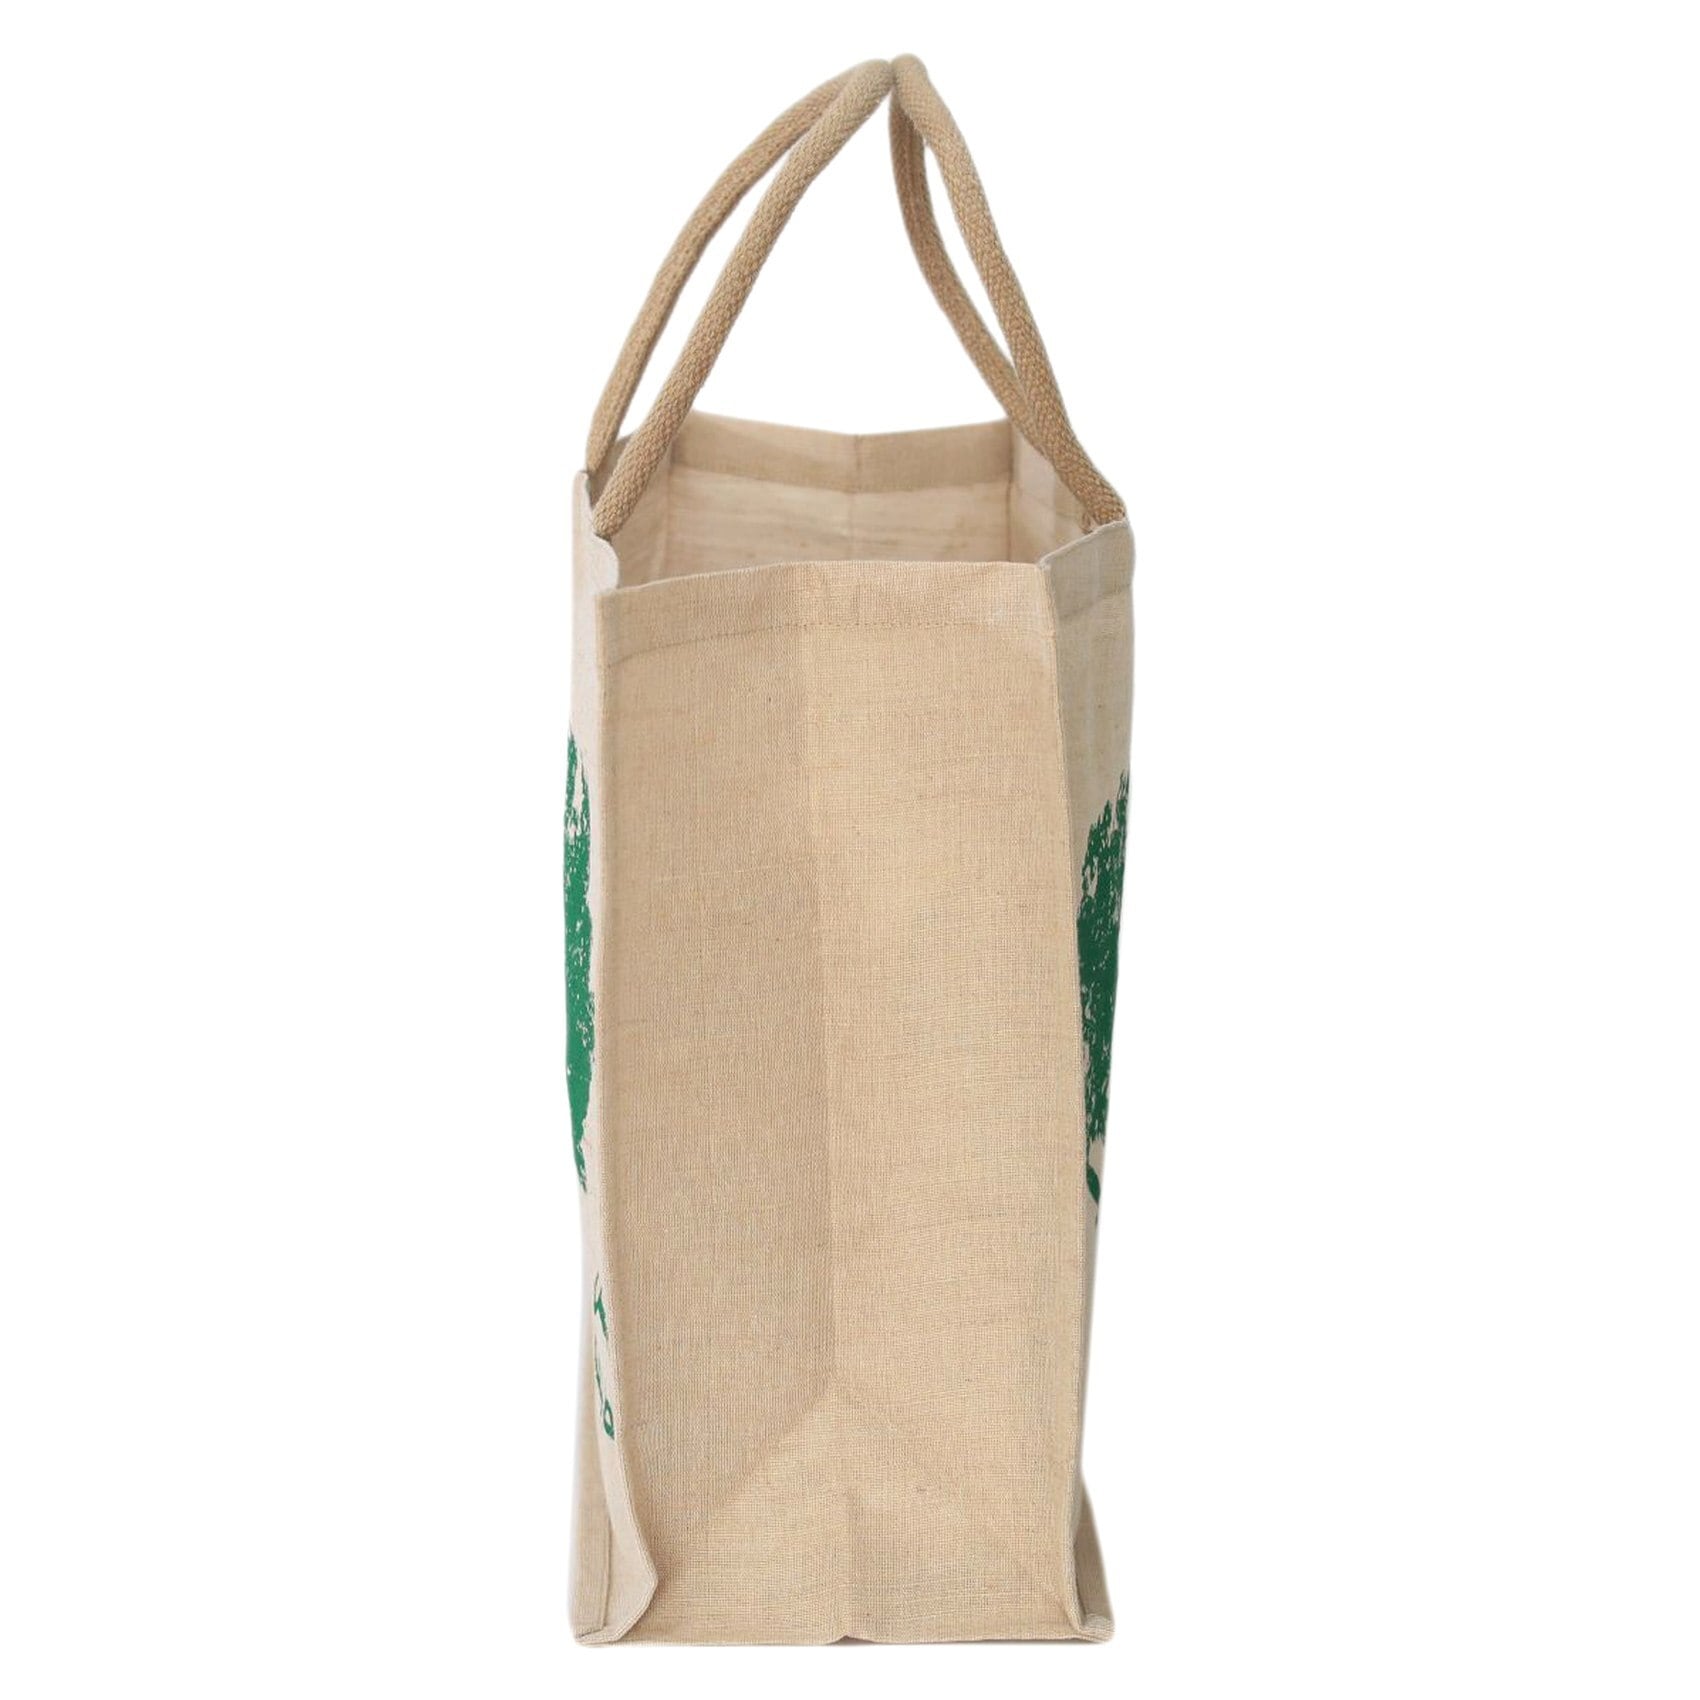 KAF Home Jute Market Tote Bag with Belle Jardiniere Print - Beige